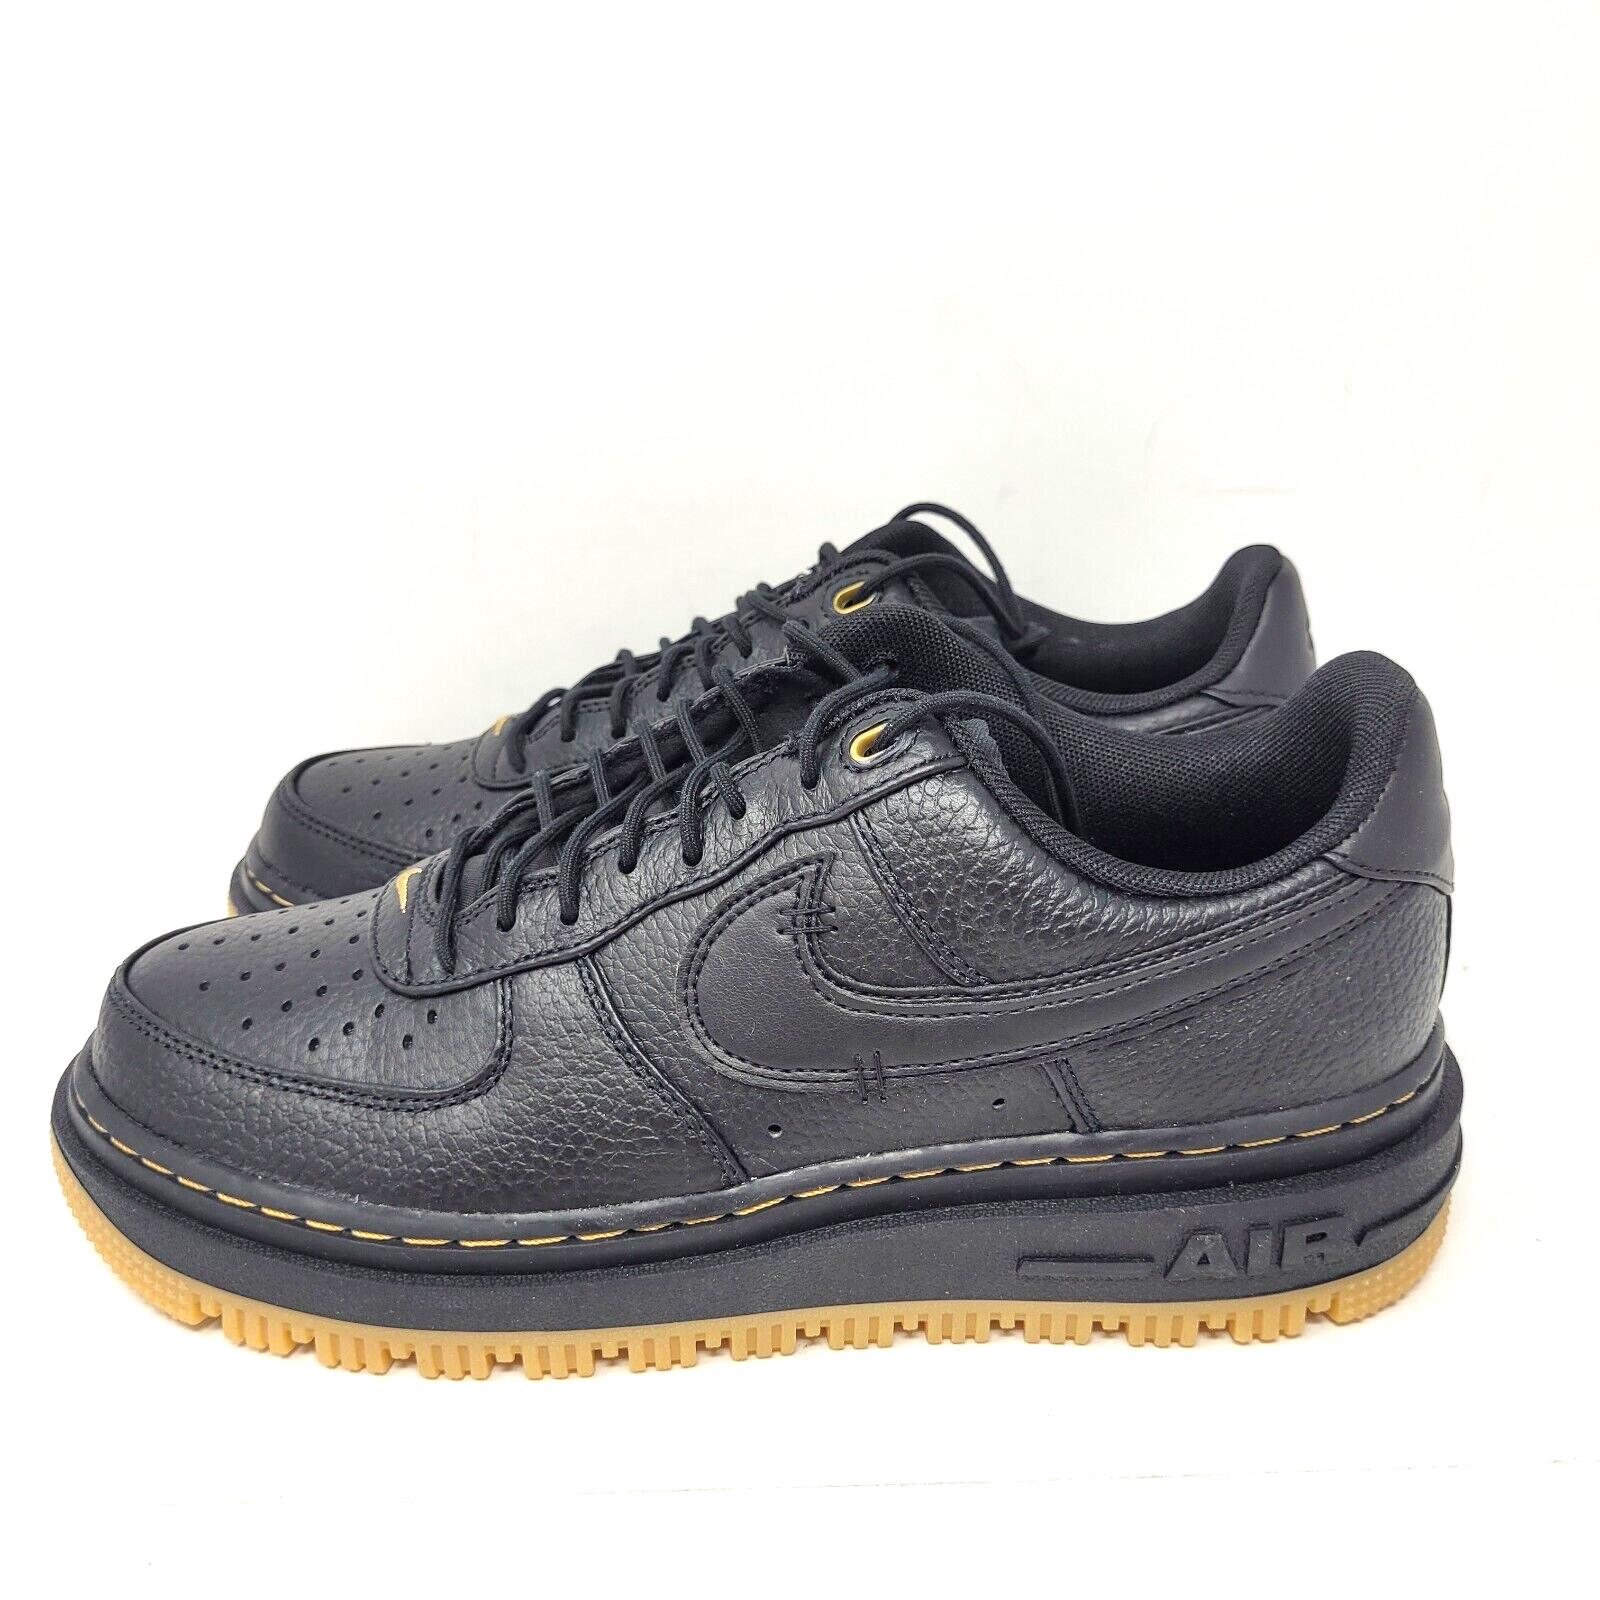 Nike shoes Air Force - Black 0